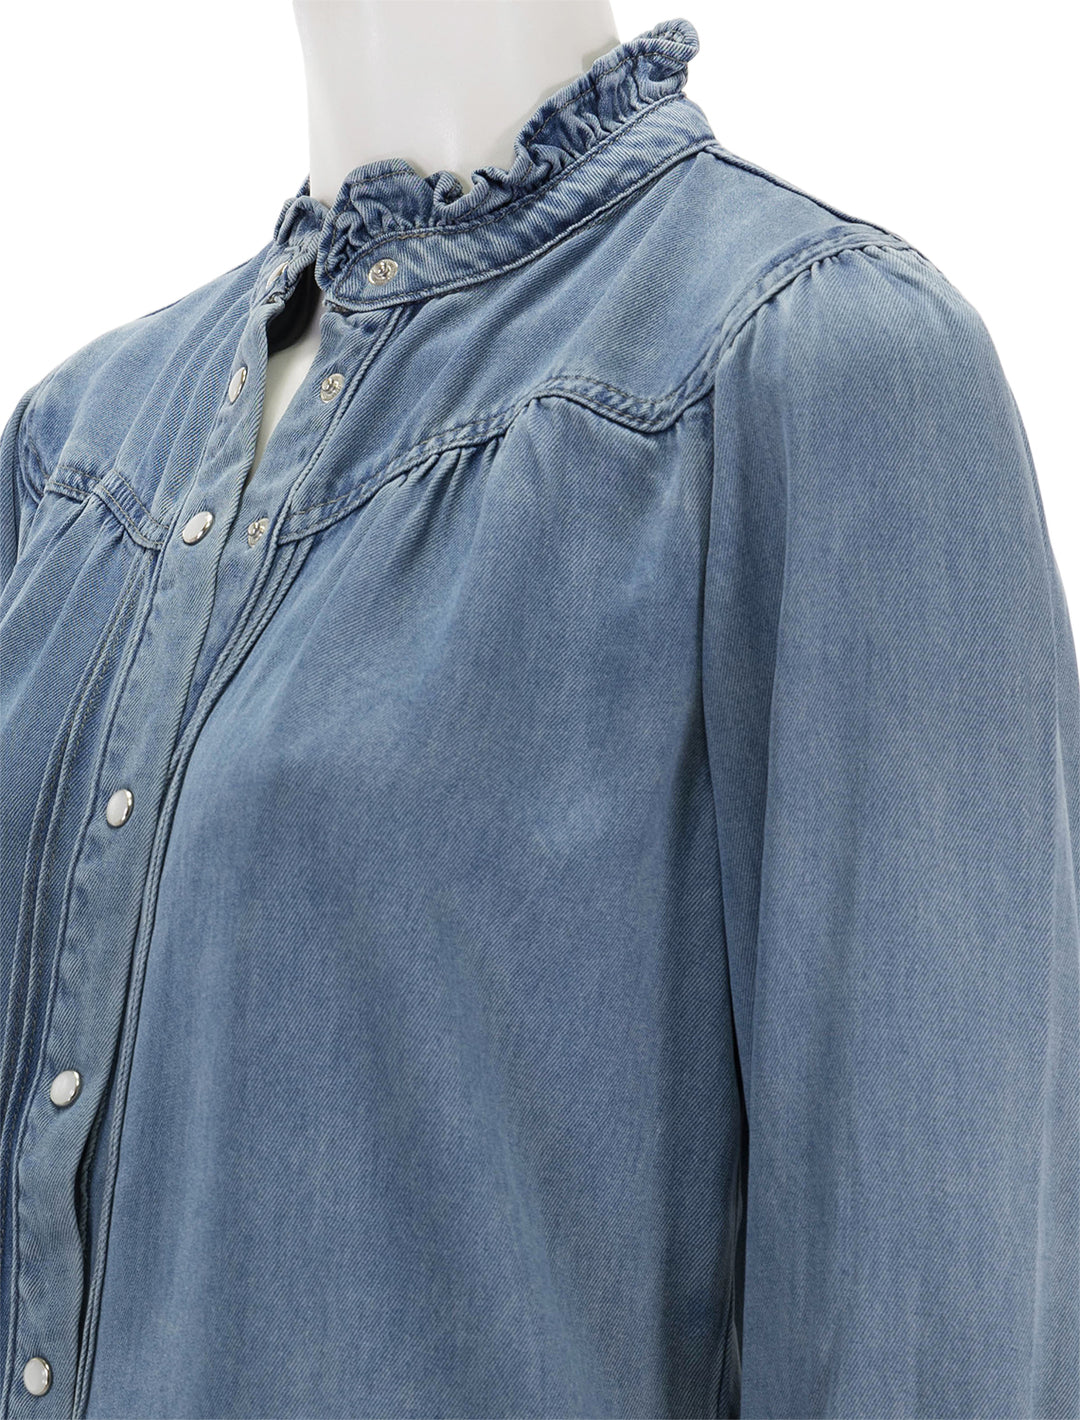 Close-up view of Suncoo Paris' laura blouse in bleu jean.